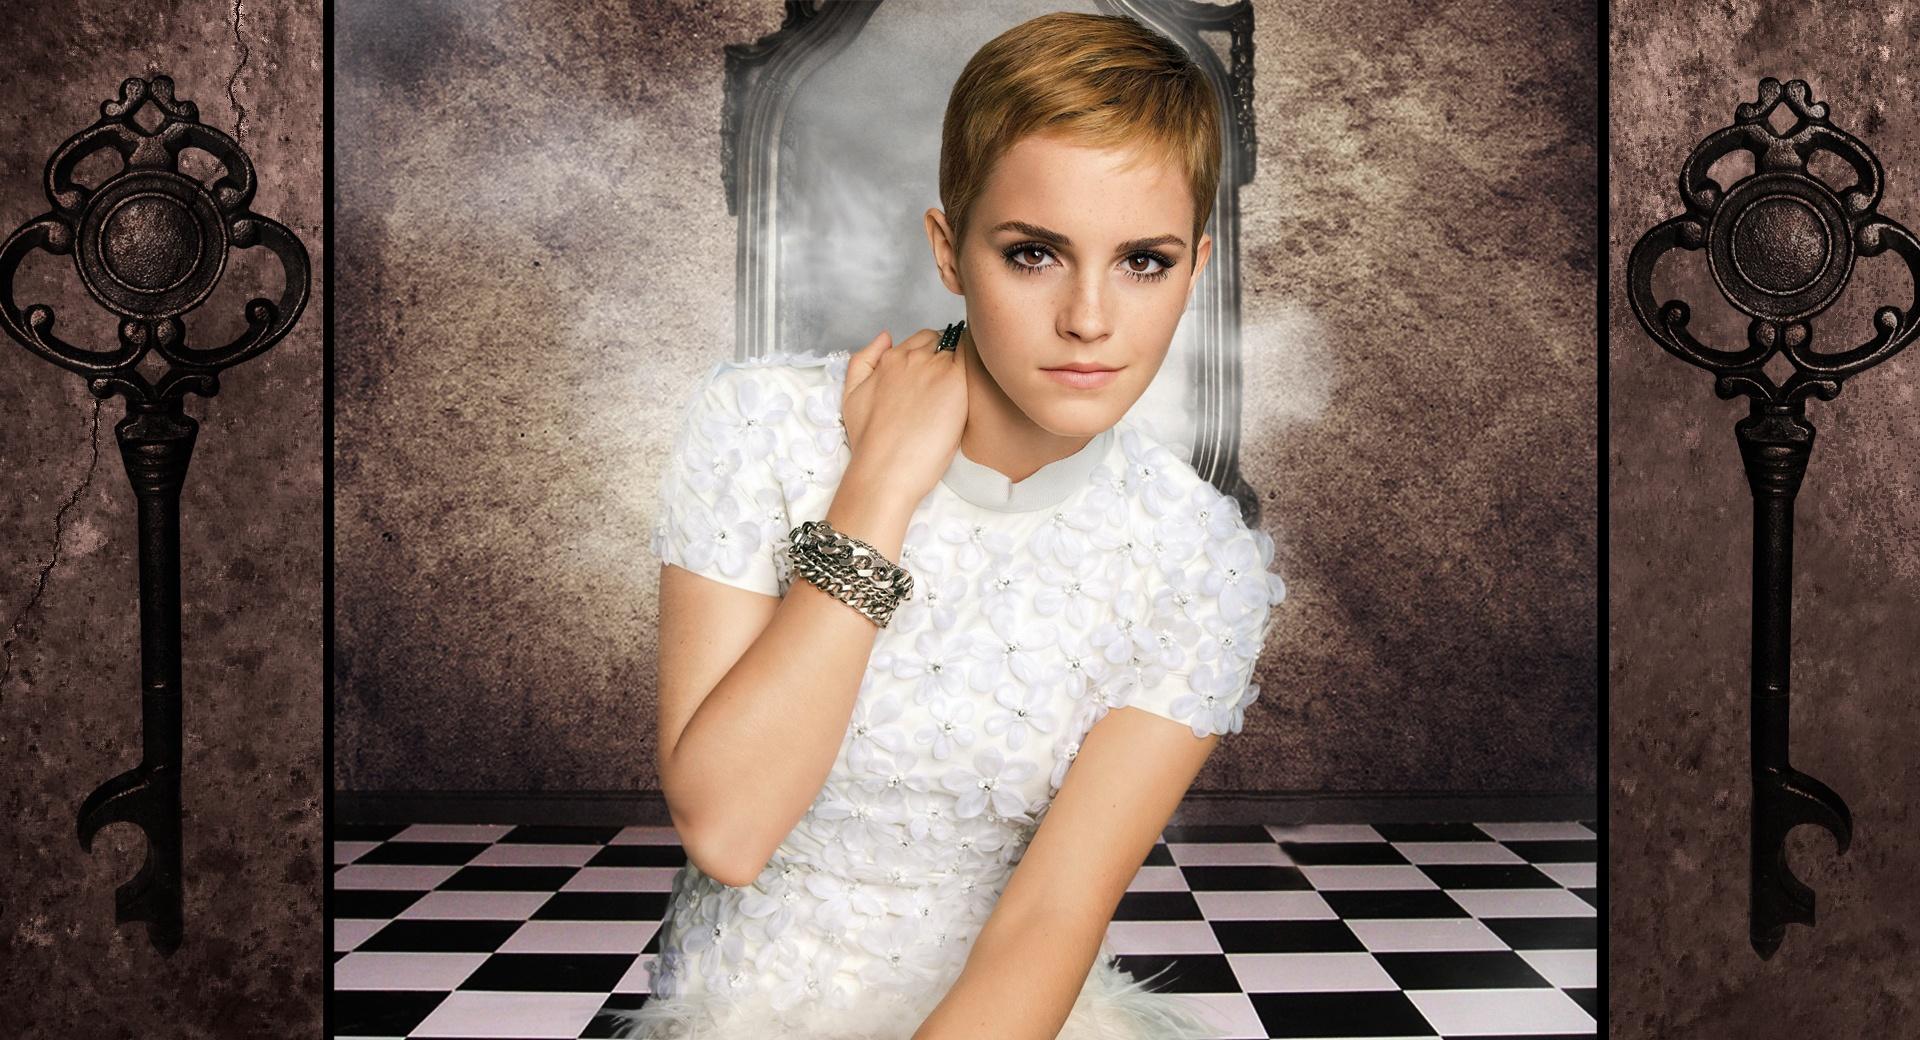 New Emma Watson at 2048 x 2048 iPad size wallpapers HD quality